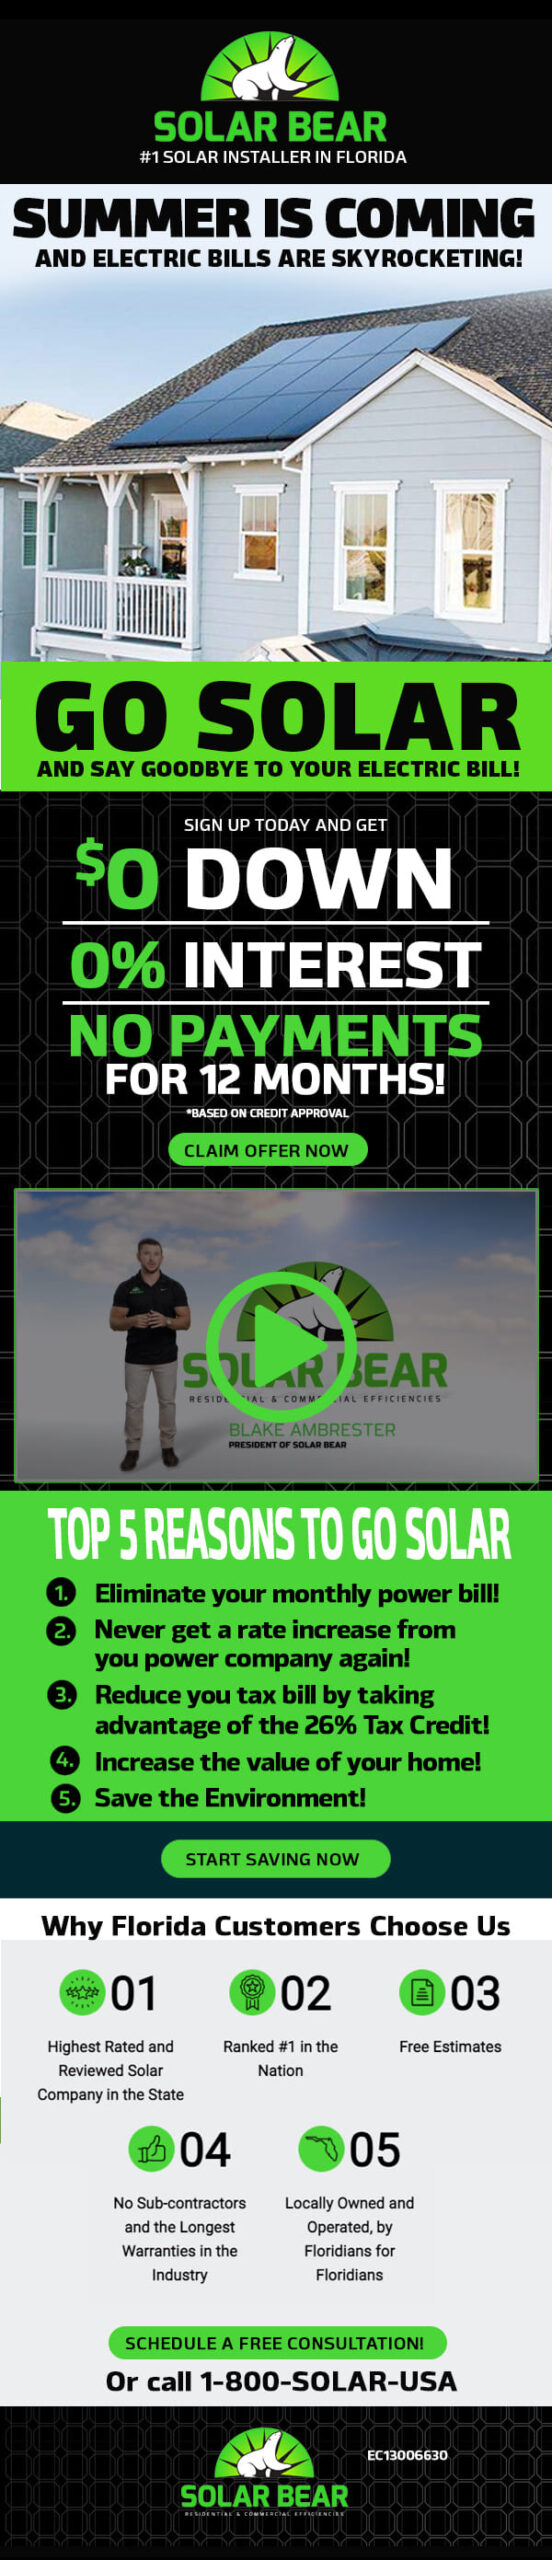 Solar Bear April Email